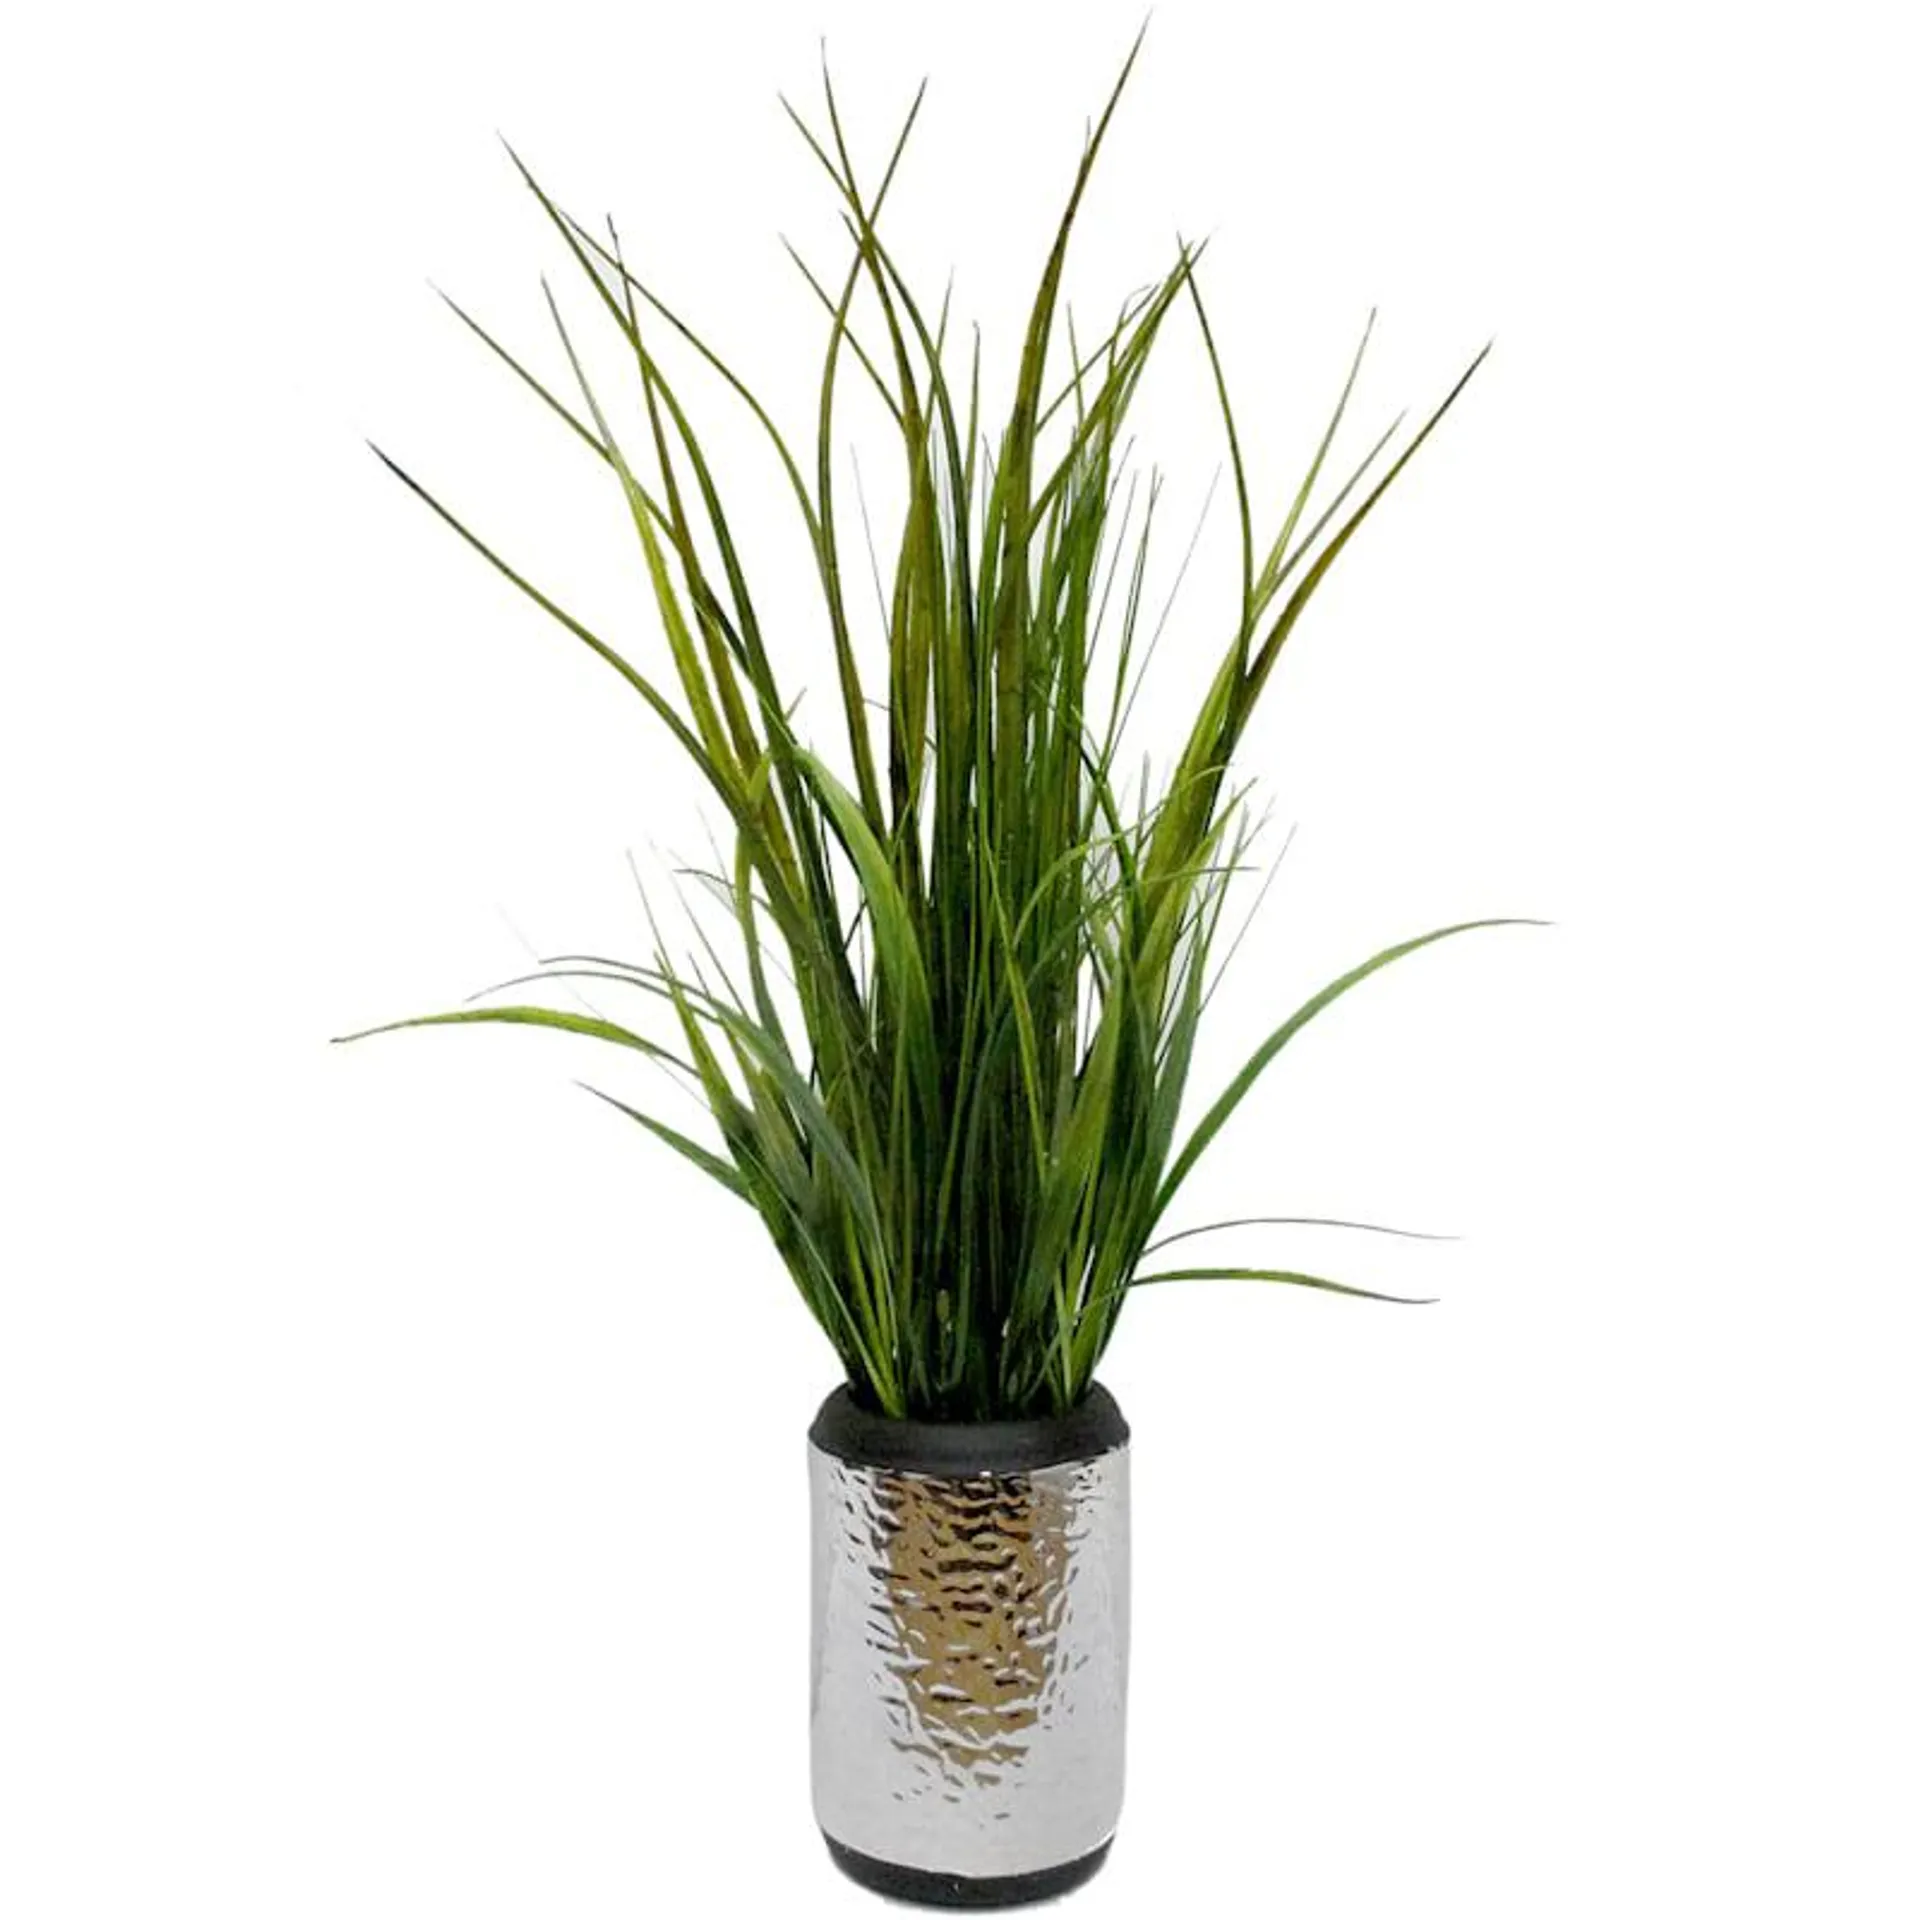 Grass Plant with Silver Ceramic Planter, 22"